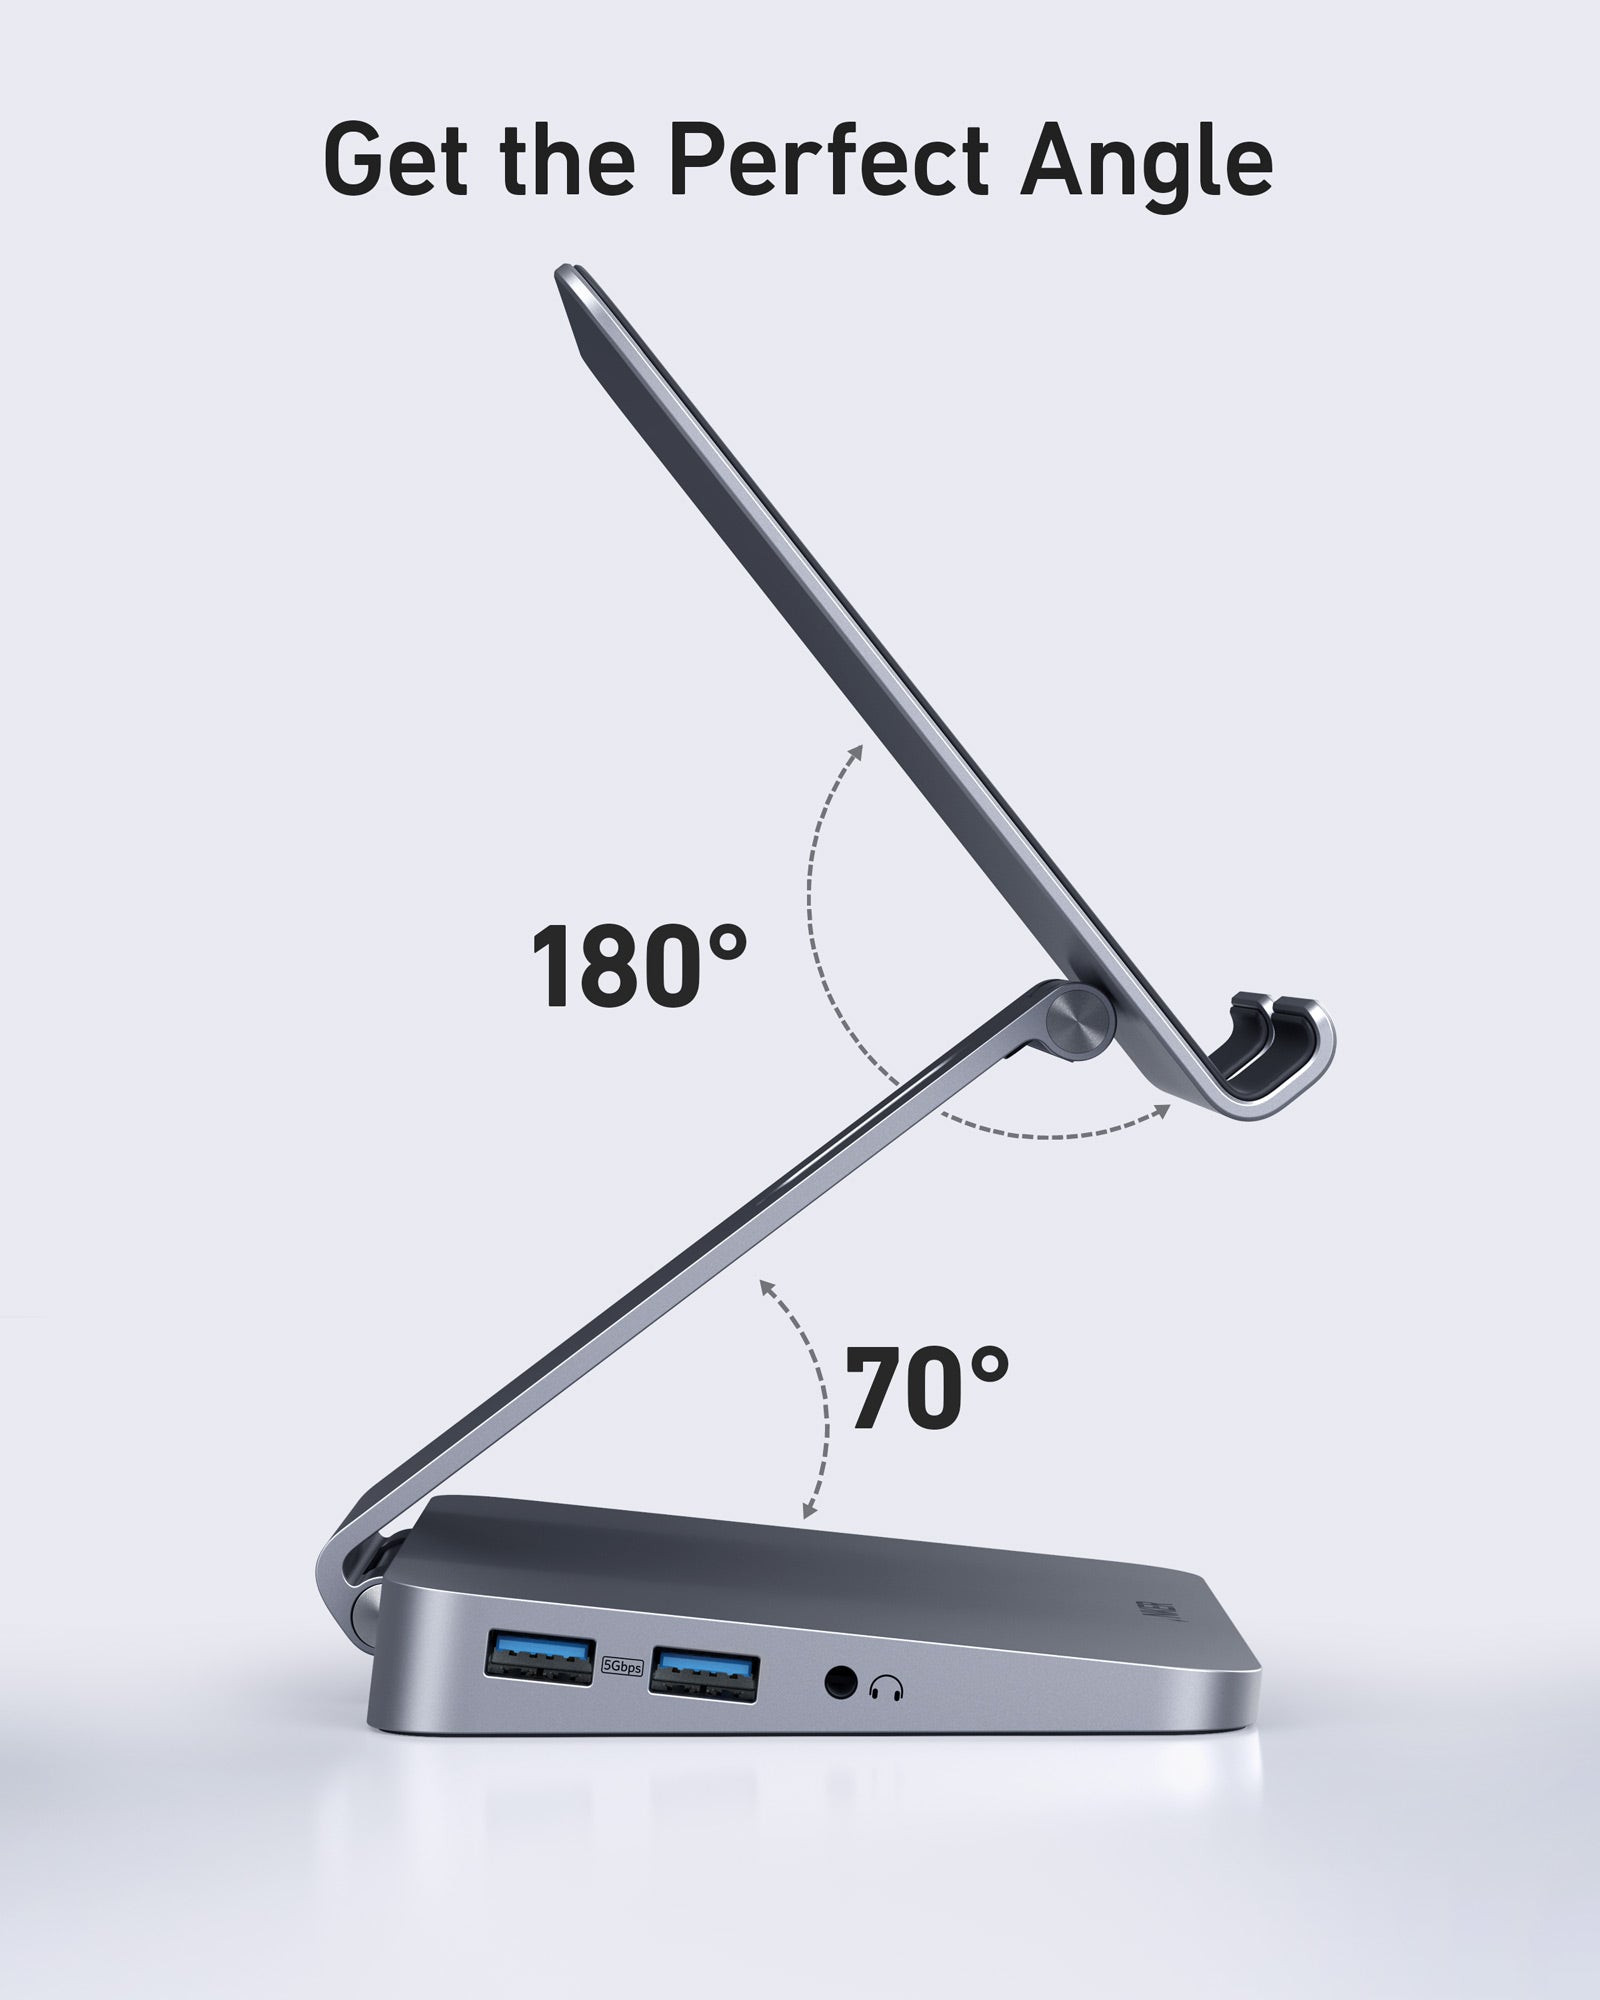 Anker 551 USB-C Hub (8-in-1, Tablet Stand) Anker US